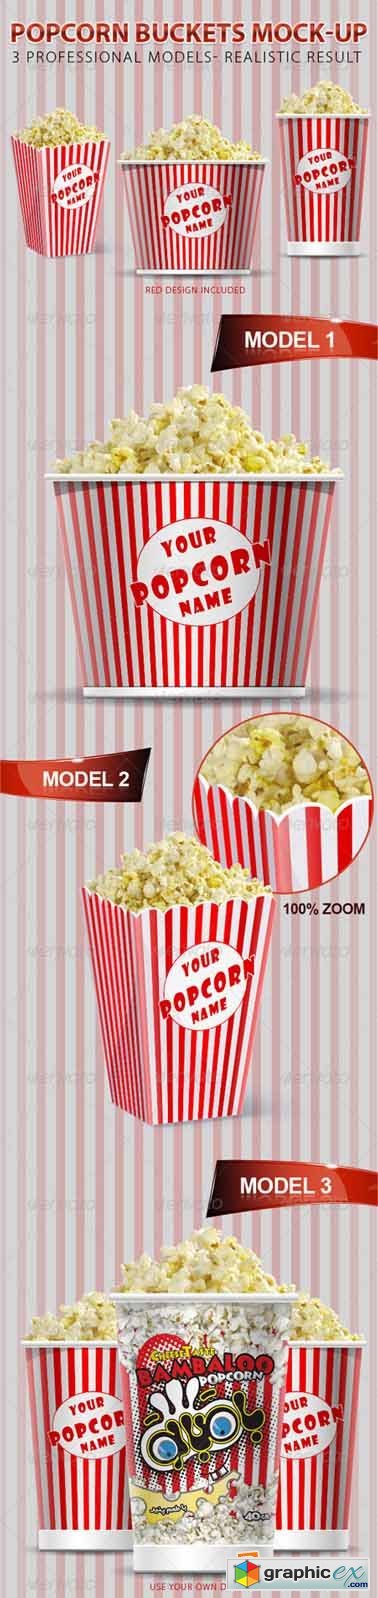 Popcorn Buckets Mock-up 548294